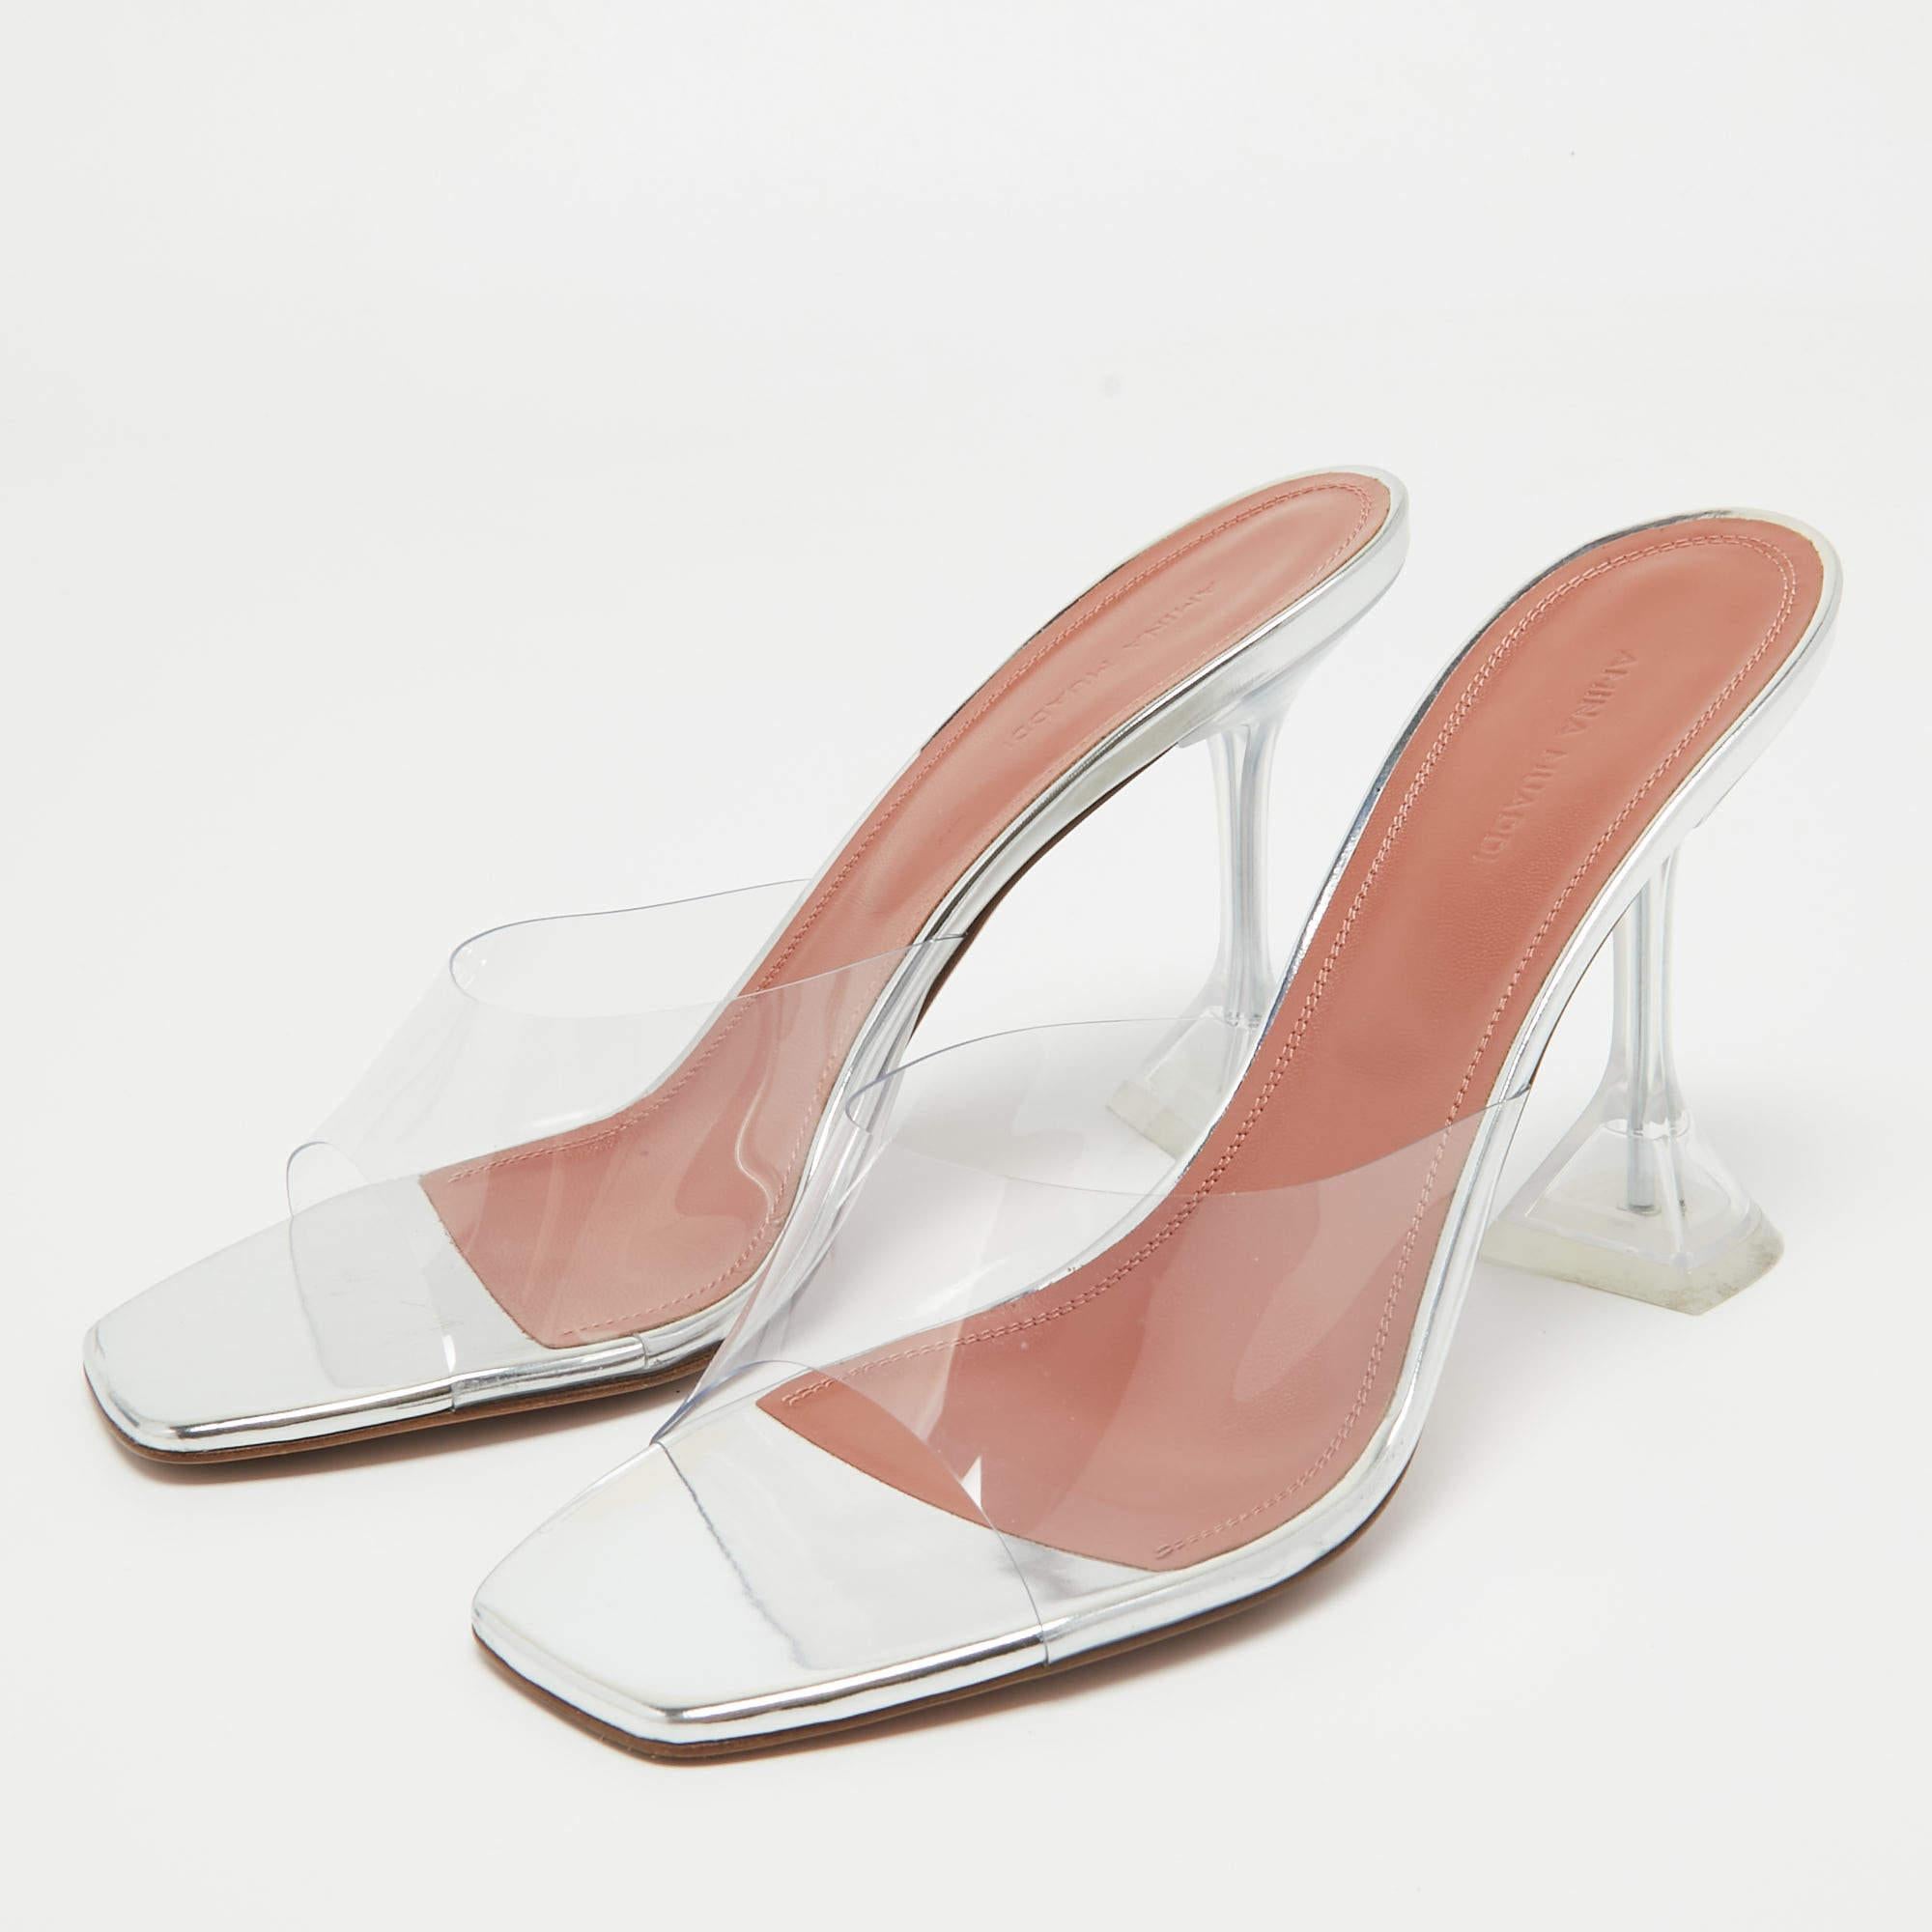 Amina Muaddi Transparent PVC Lupita Slide Sandals Size 41 2